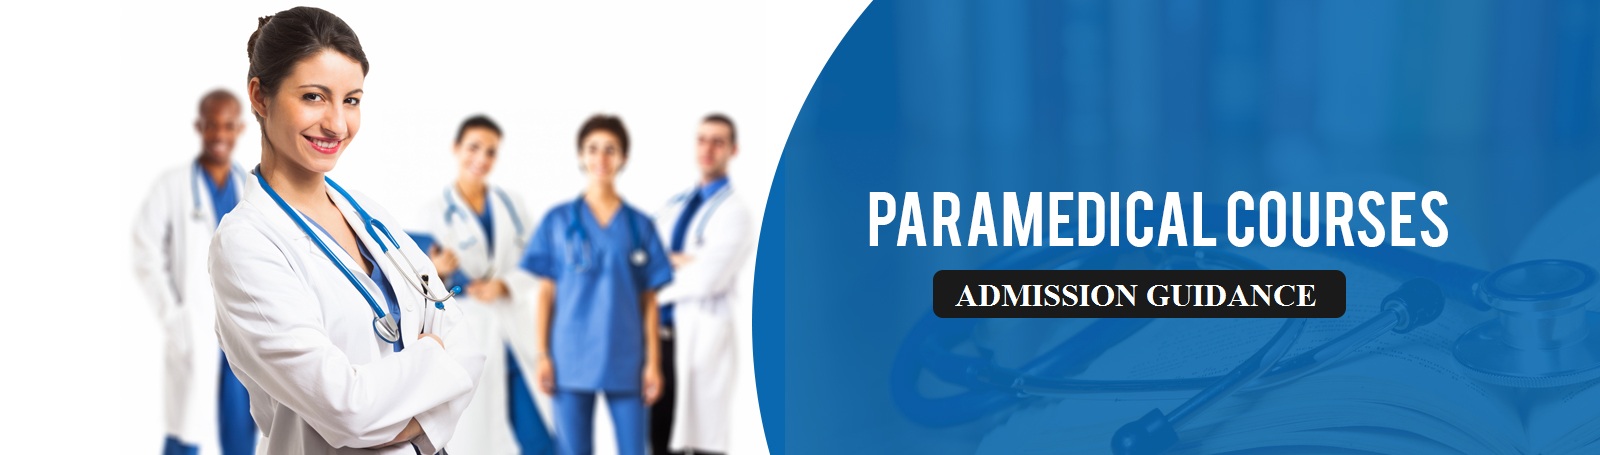 paramedical-courses